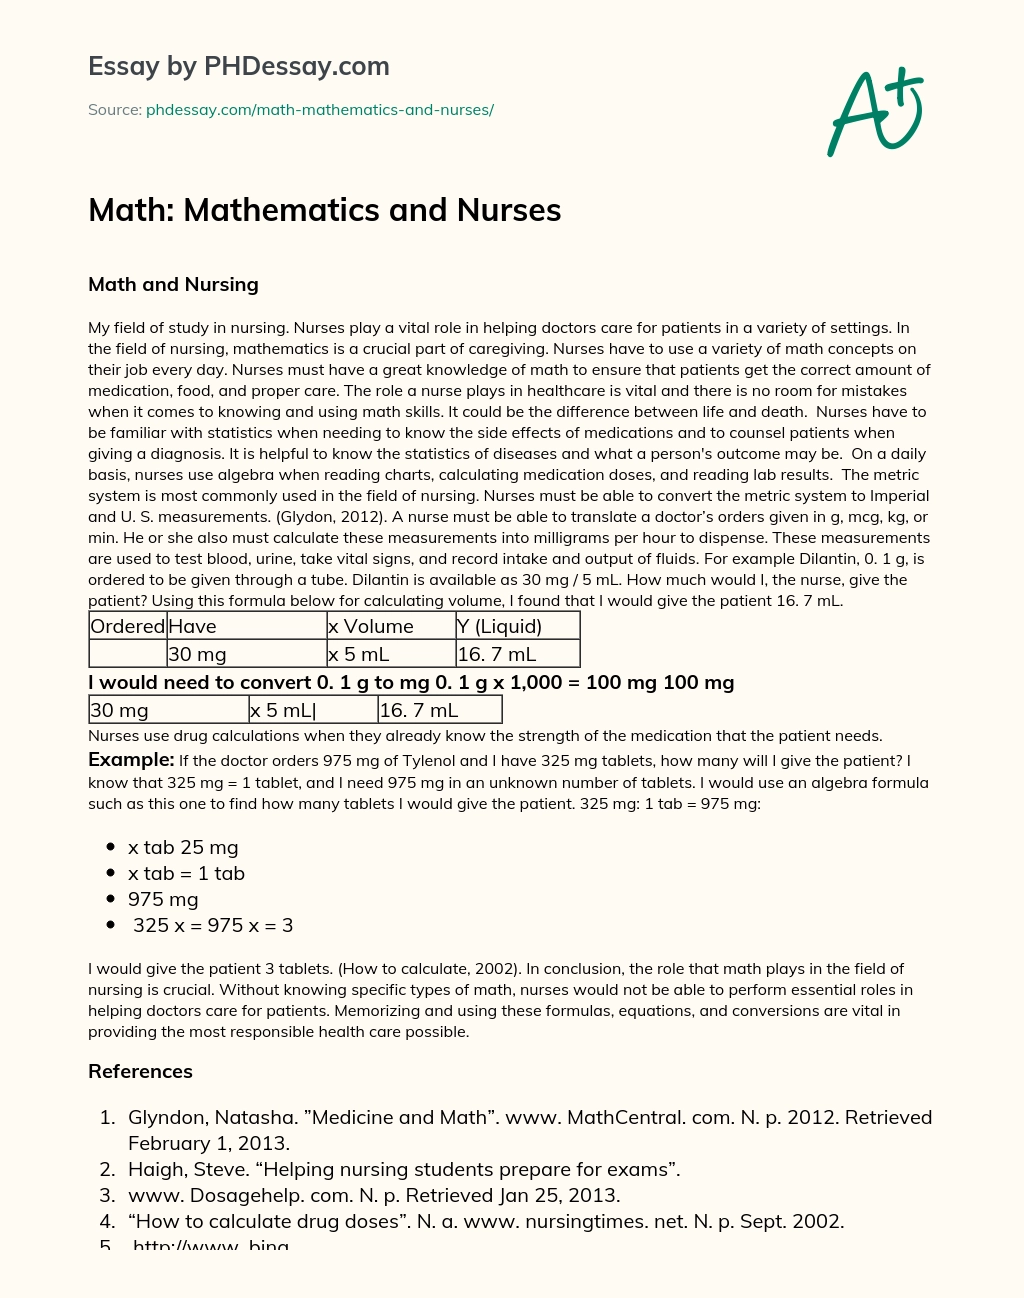 Math: Mathematics and Nurses essay